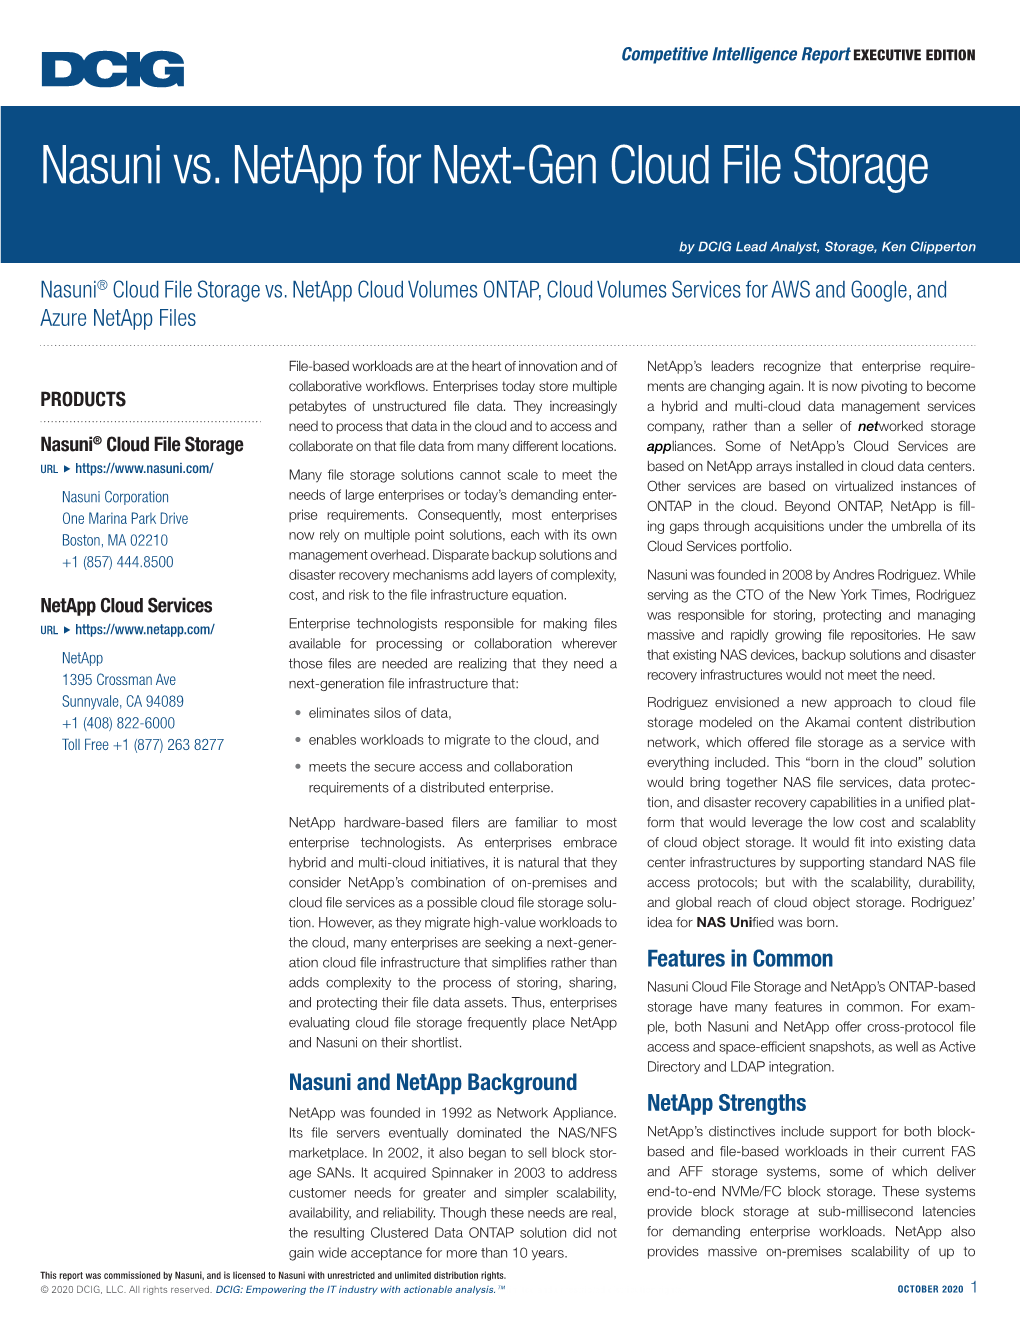 Nasuni Vs. Netapp for Next-Gen Cloud File Storage